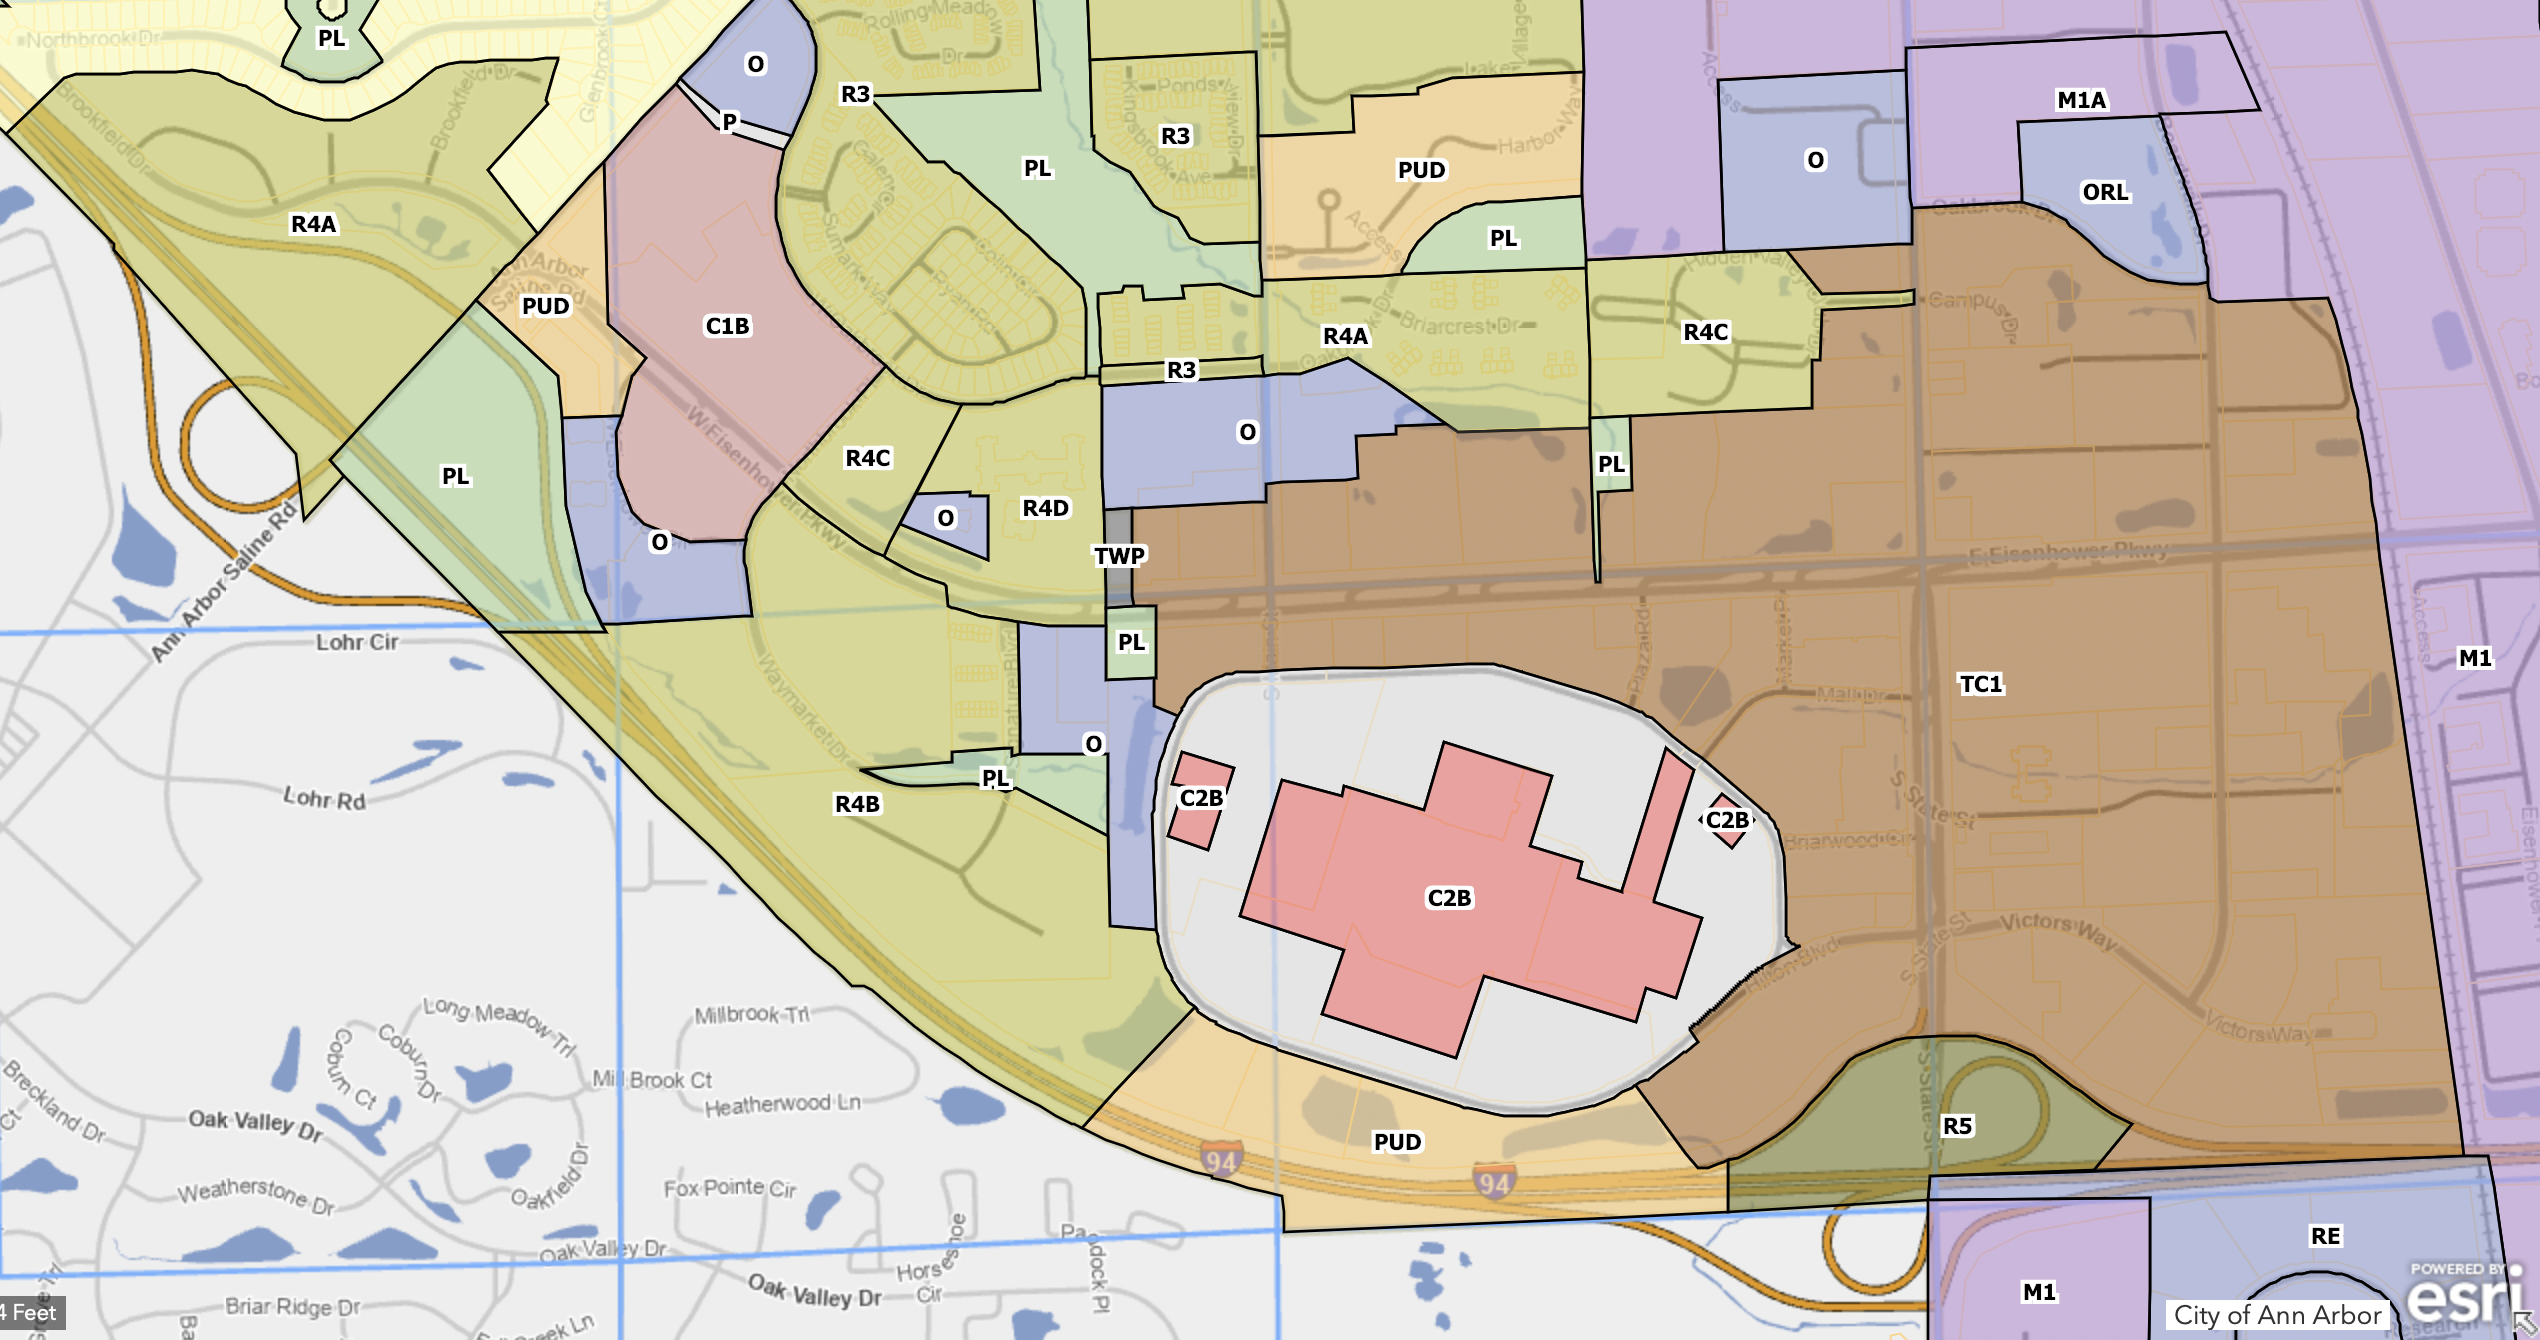 Mall Map of Briarwood Mall, a Simon Mall - Ann Arbor, MI